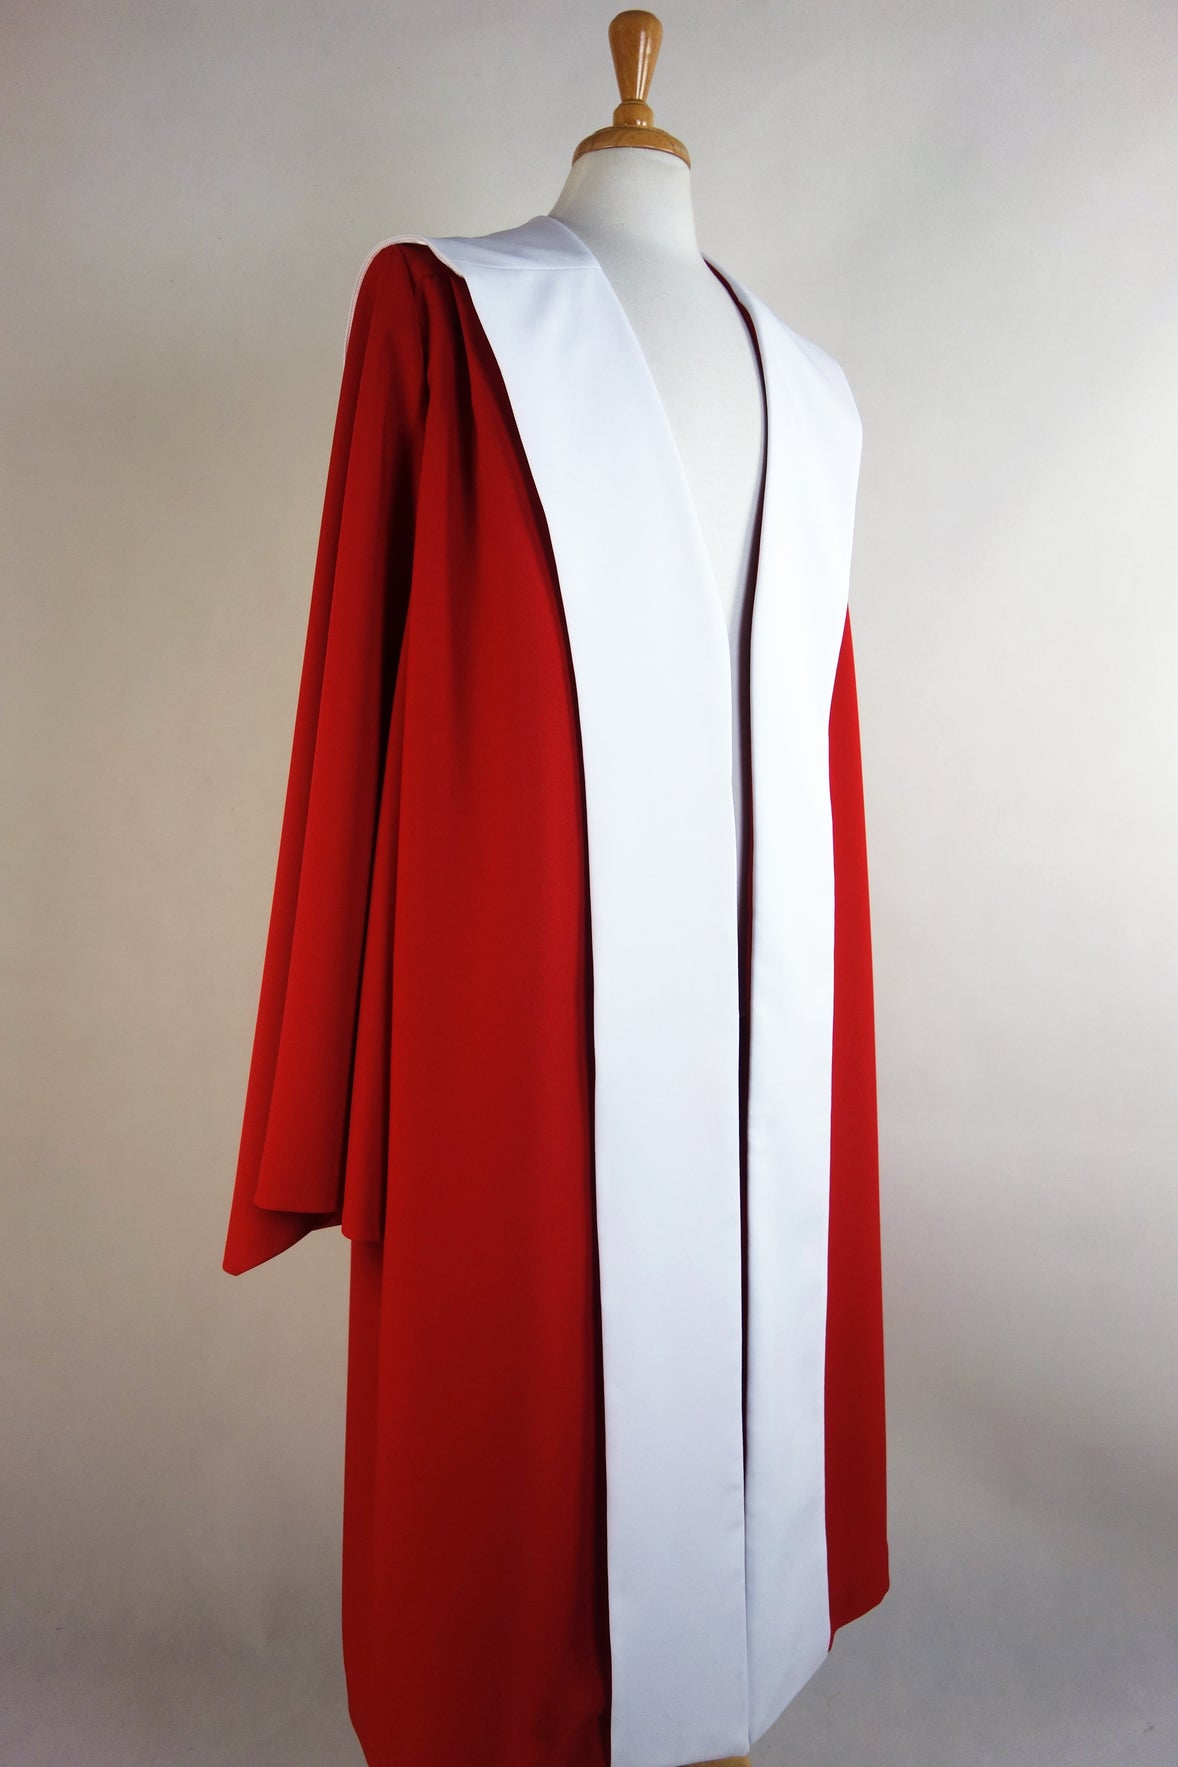 UTS PhD Graduation Gown